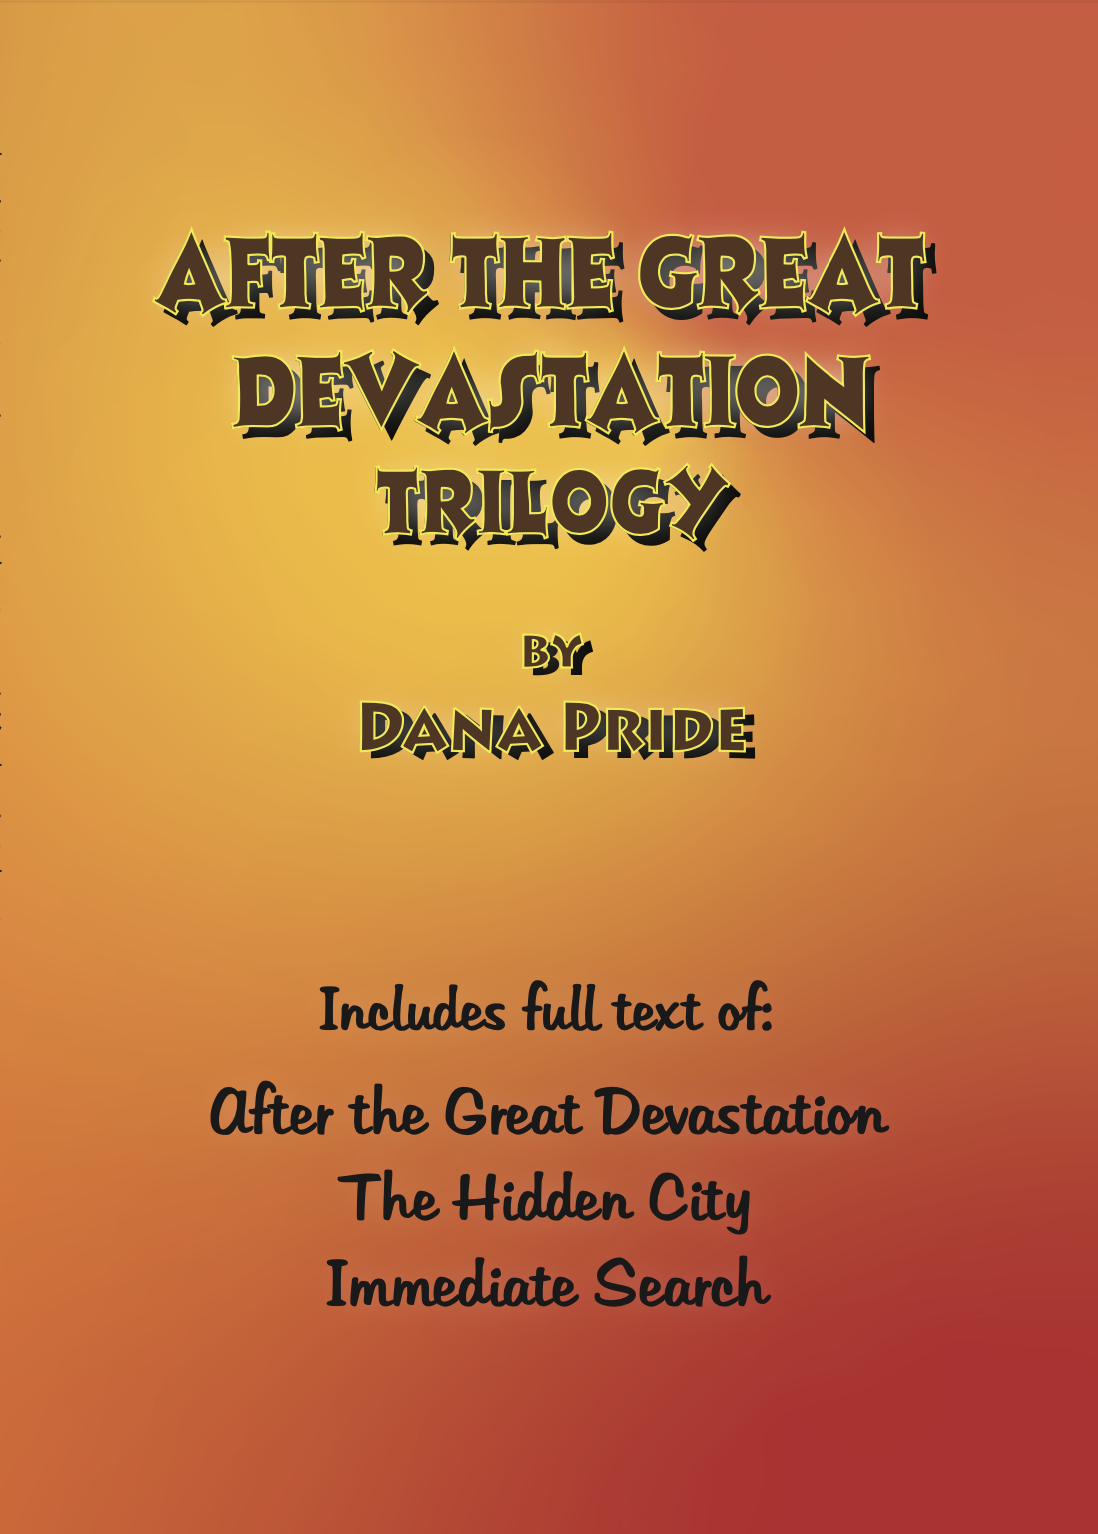 After the Great Devastation Trilogy cover